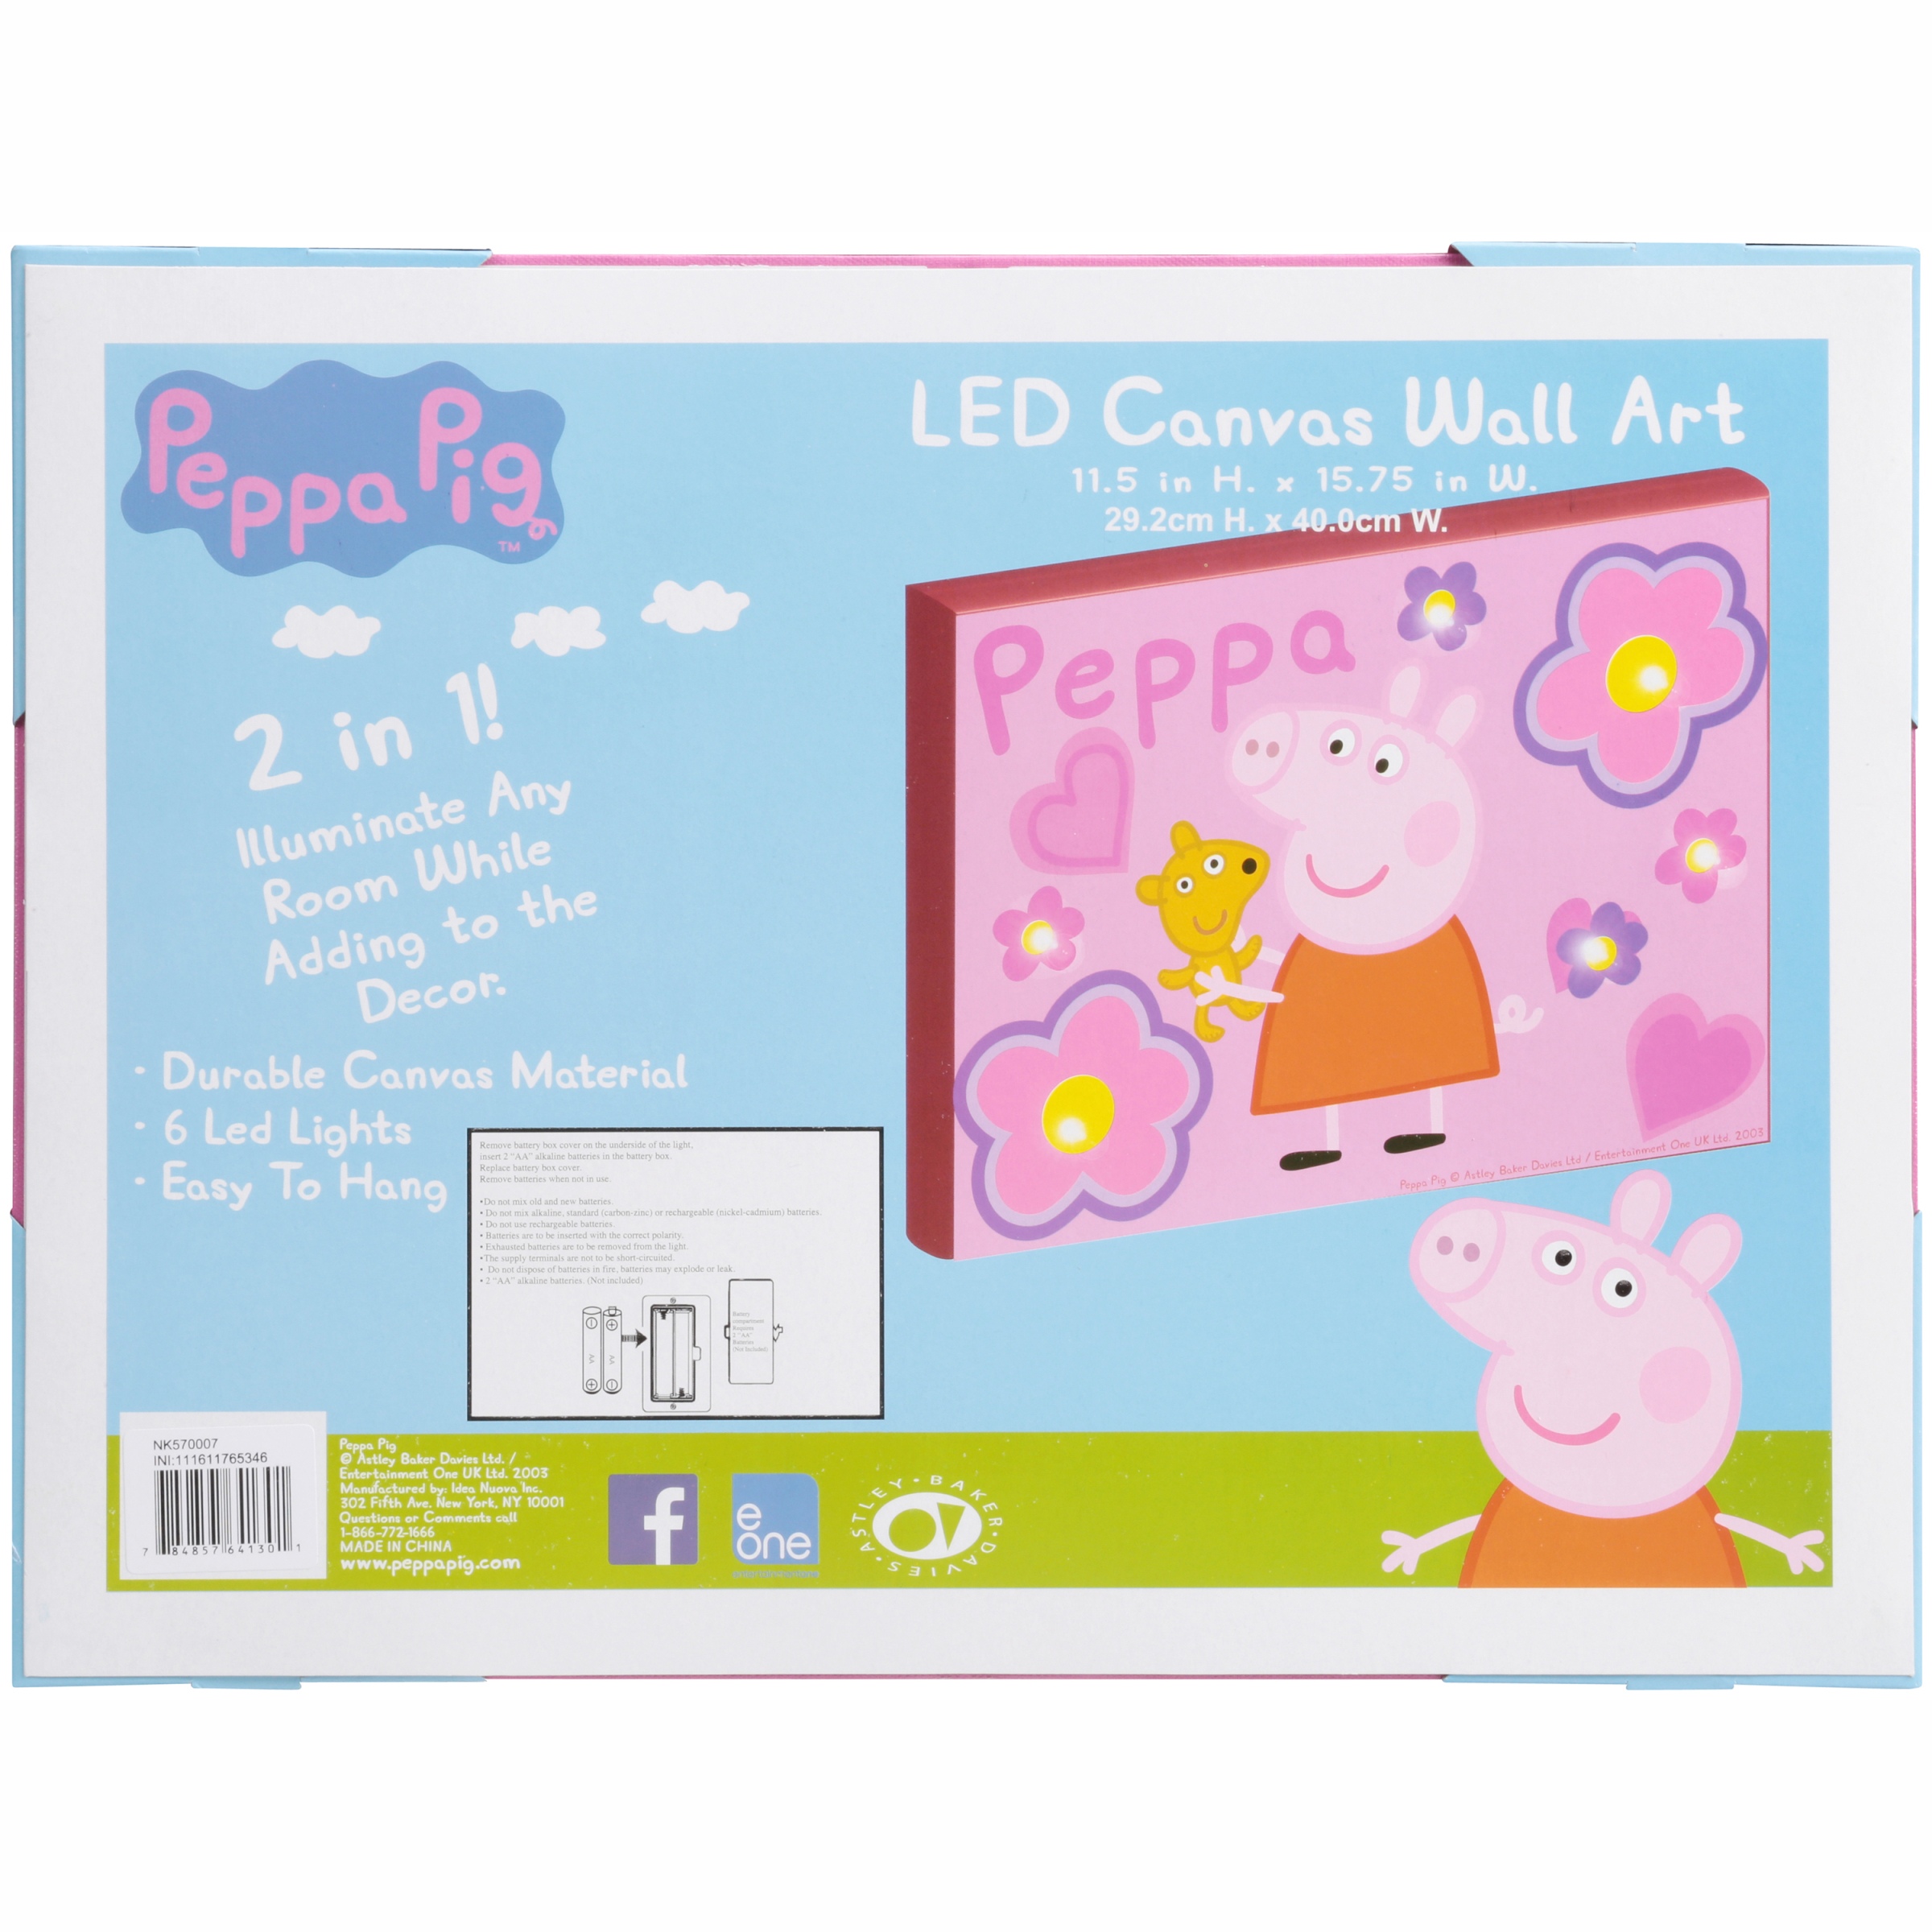 Peppa Pig LED Canvas Wall Art - image 4 of 6